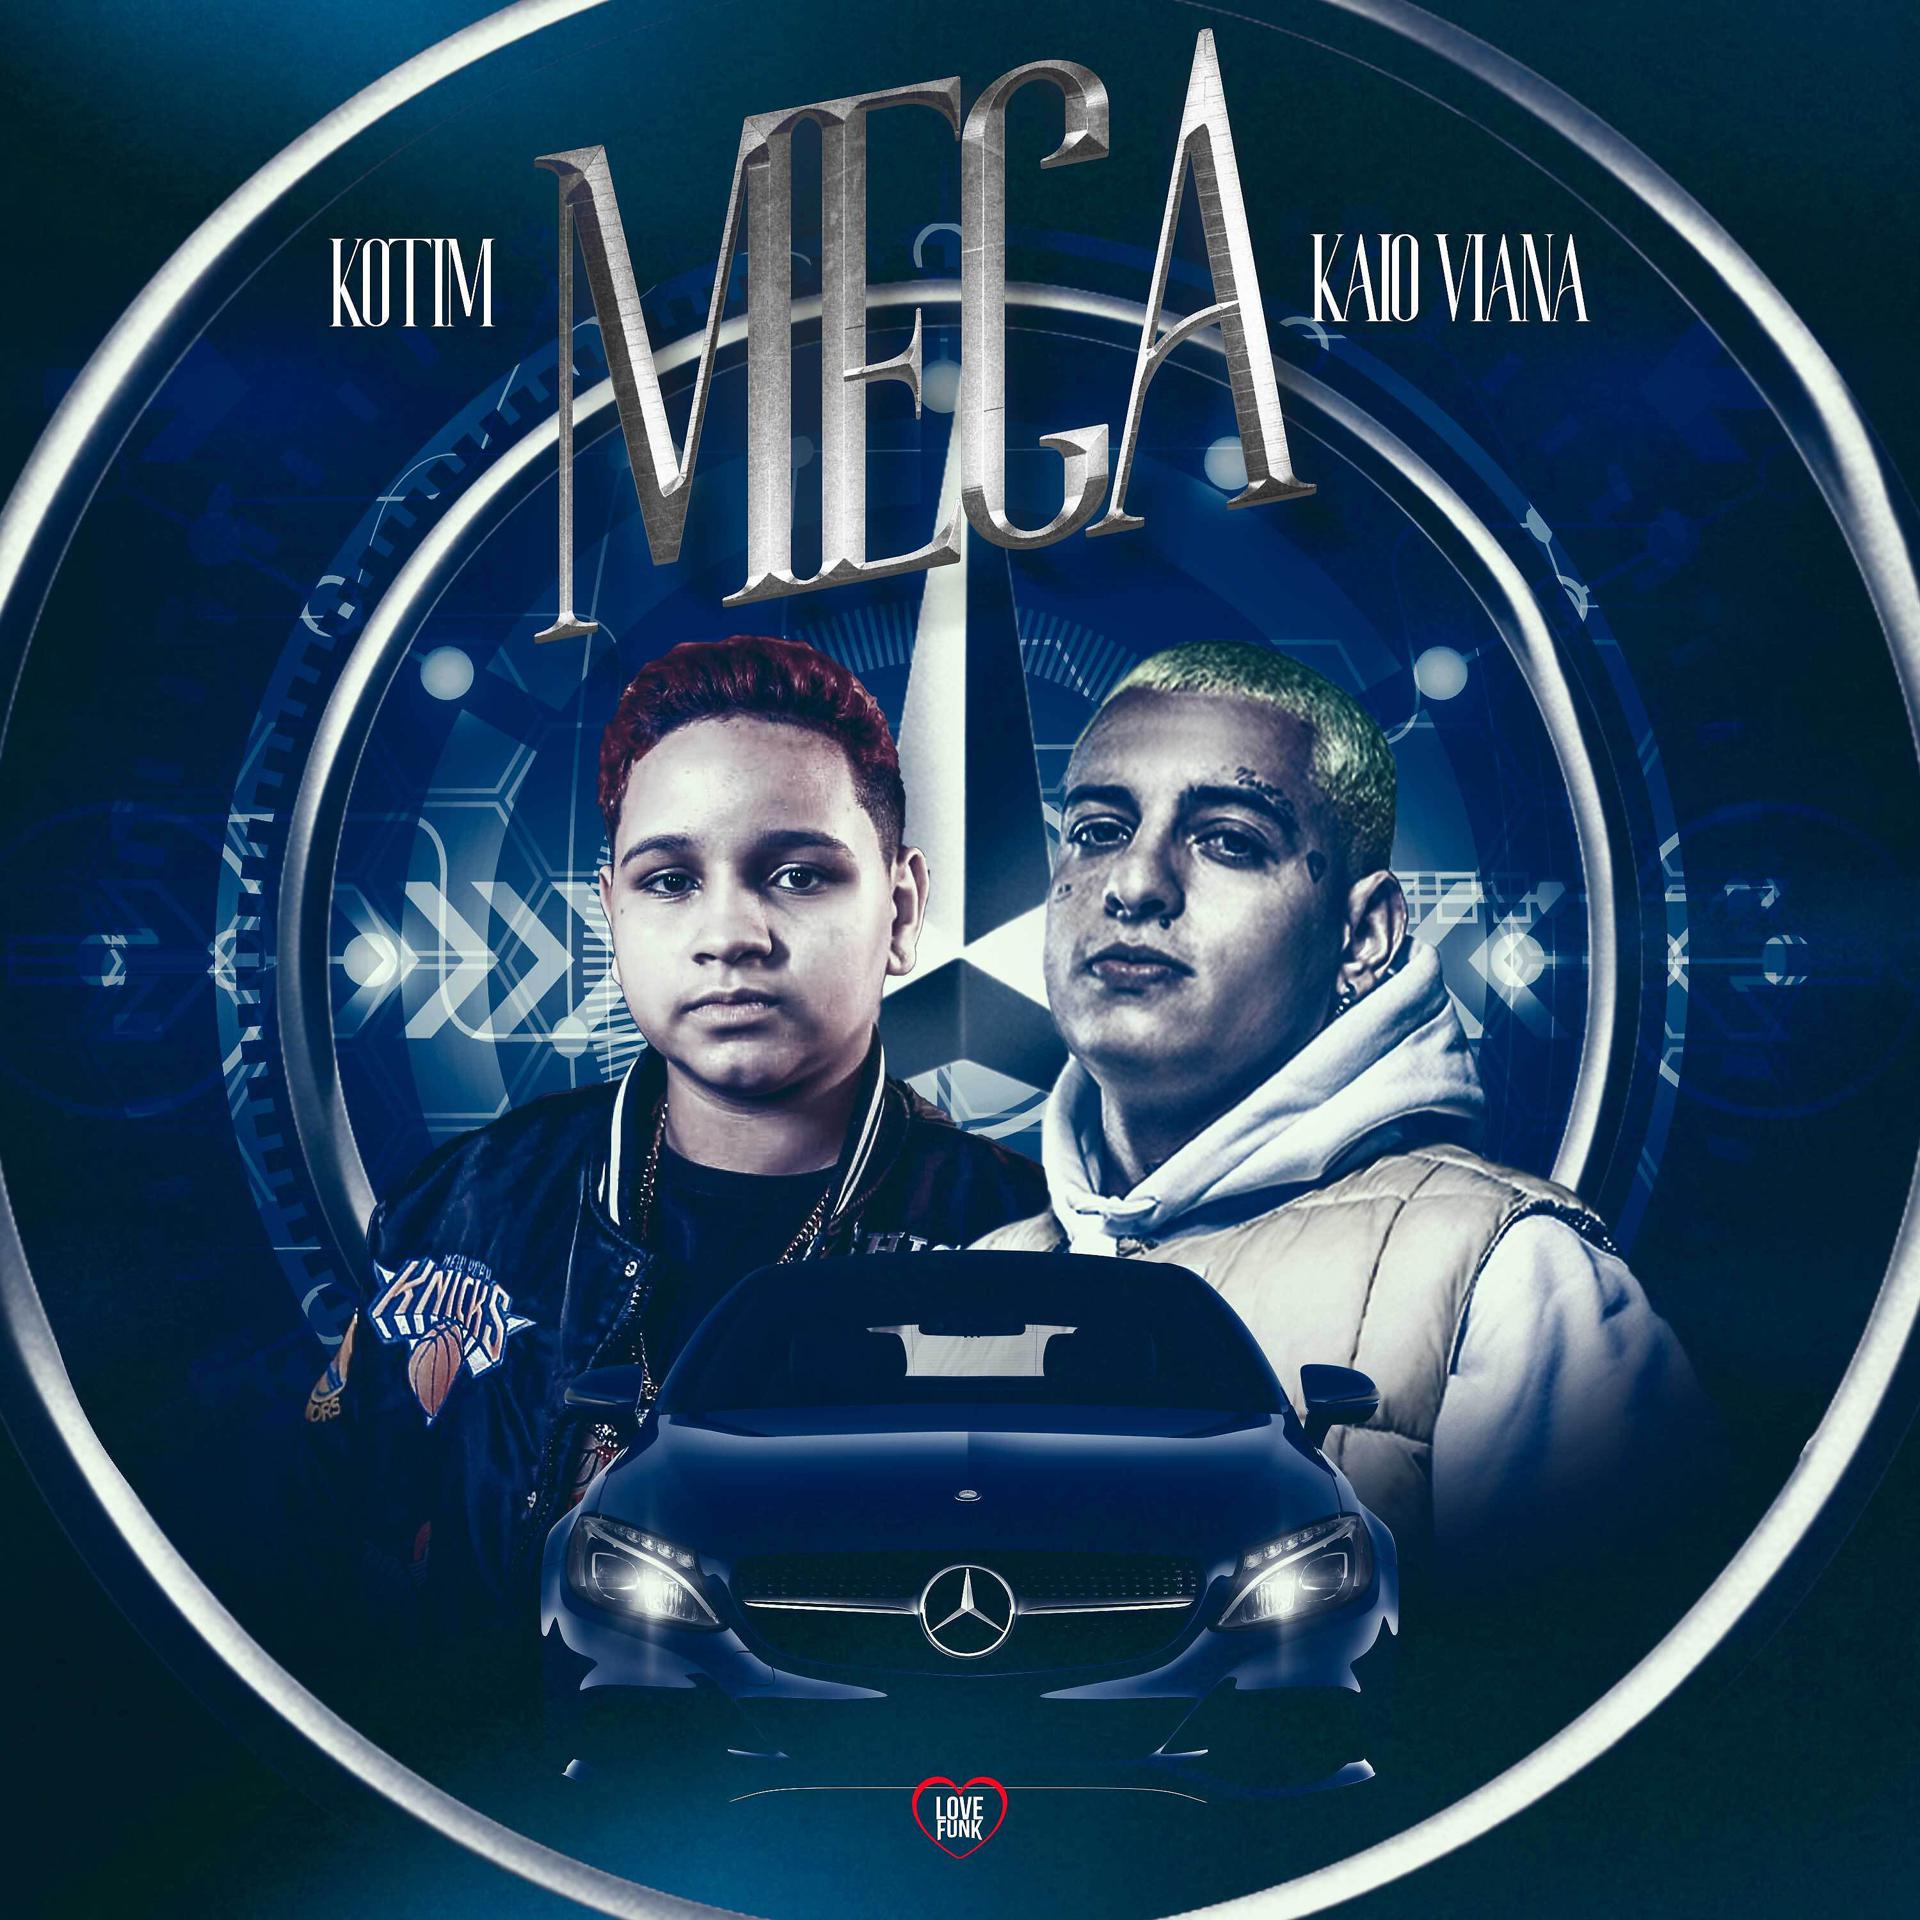 Постер альбома Meca